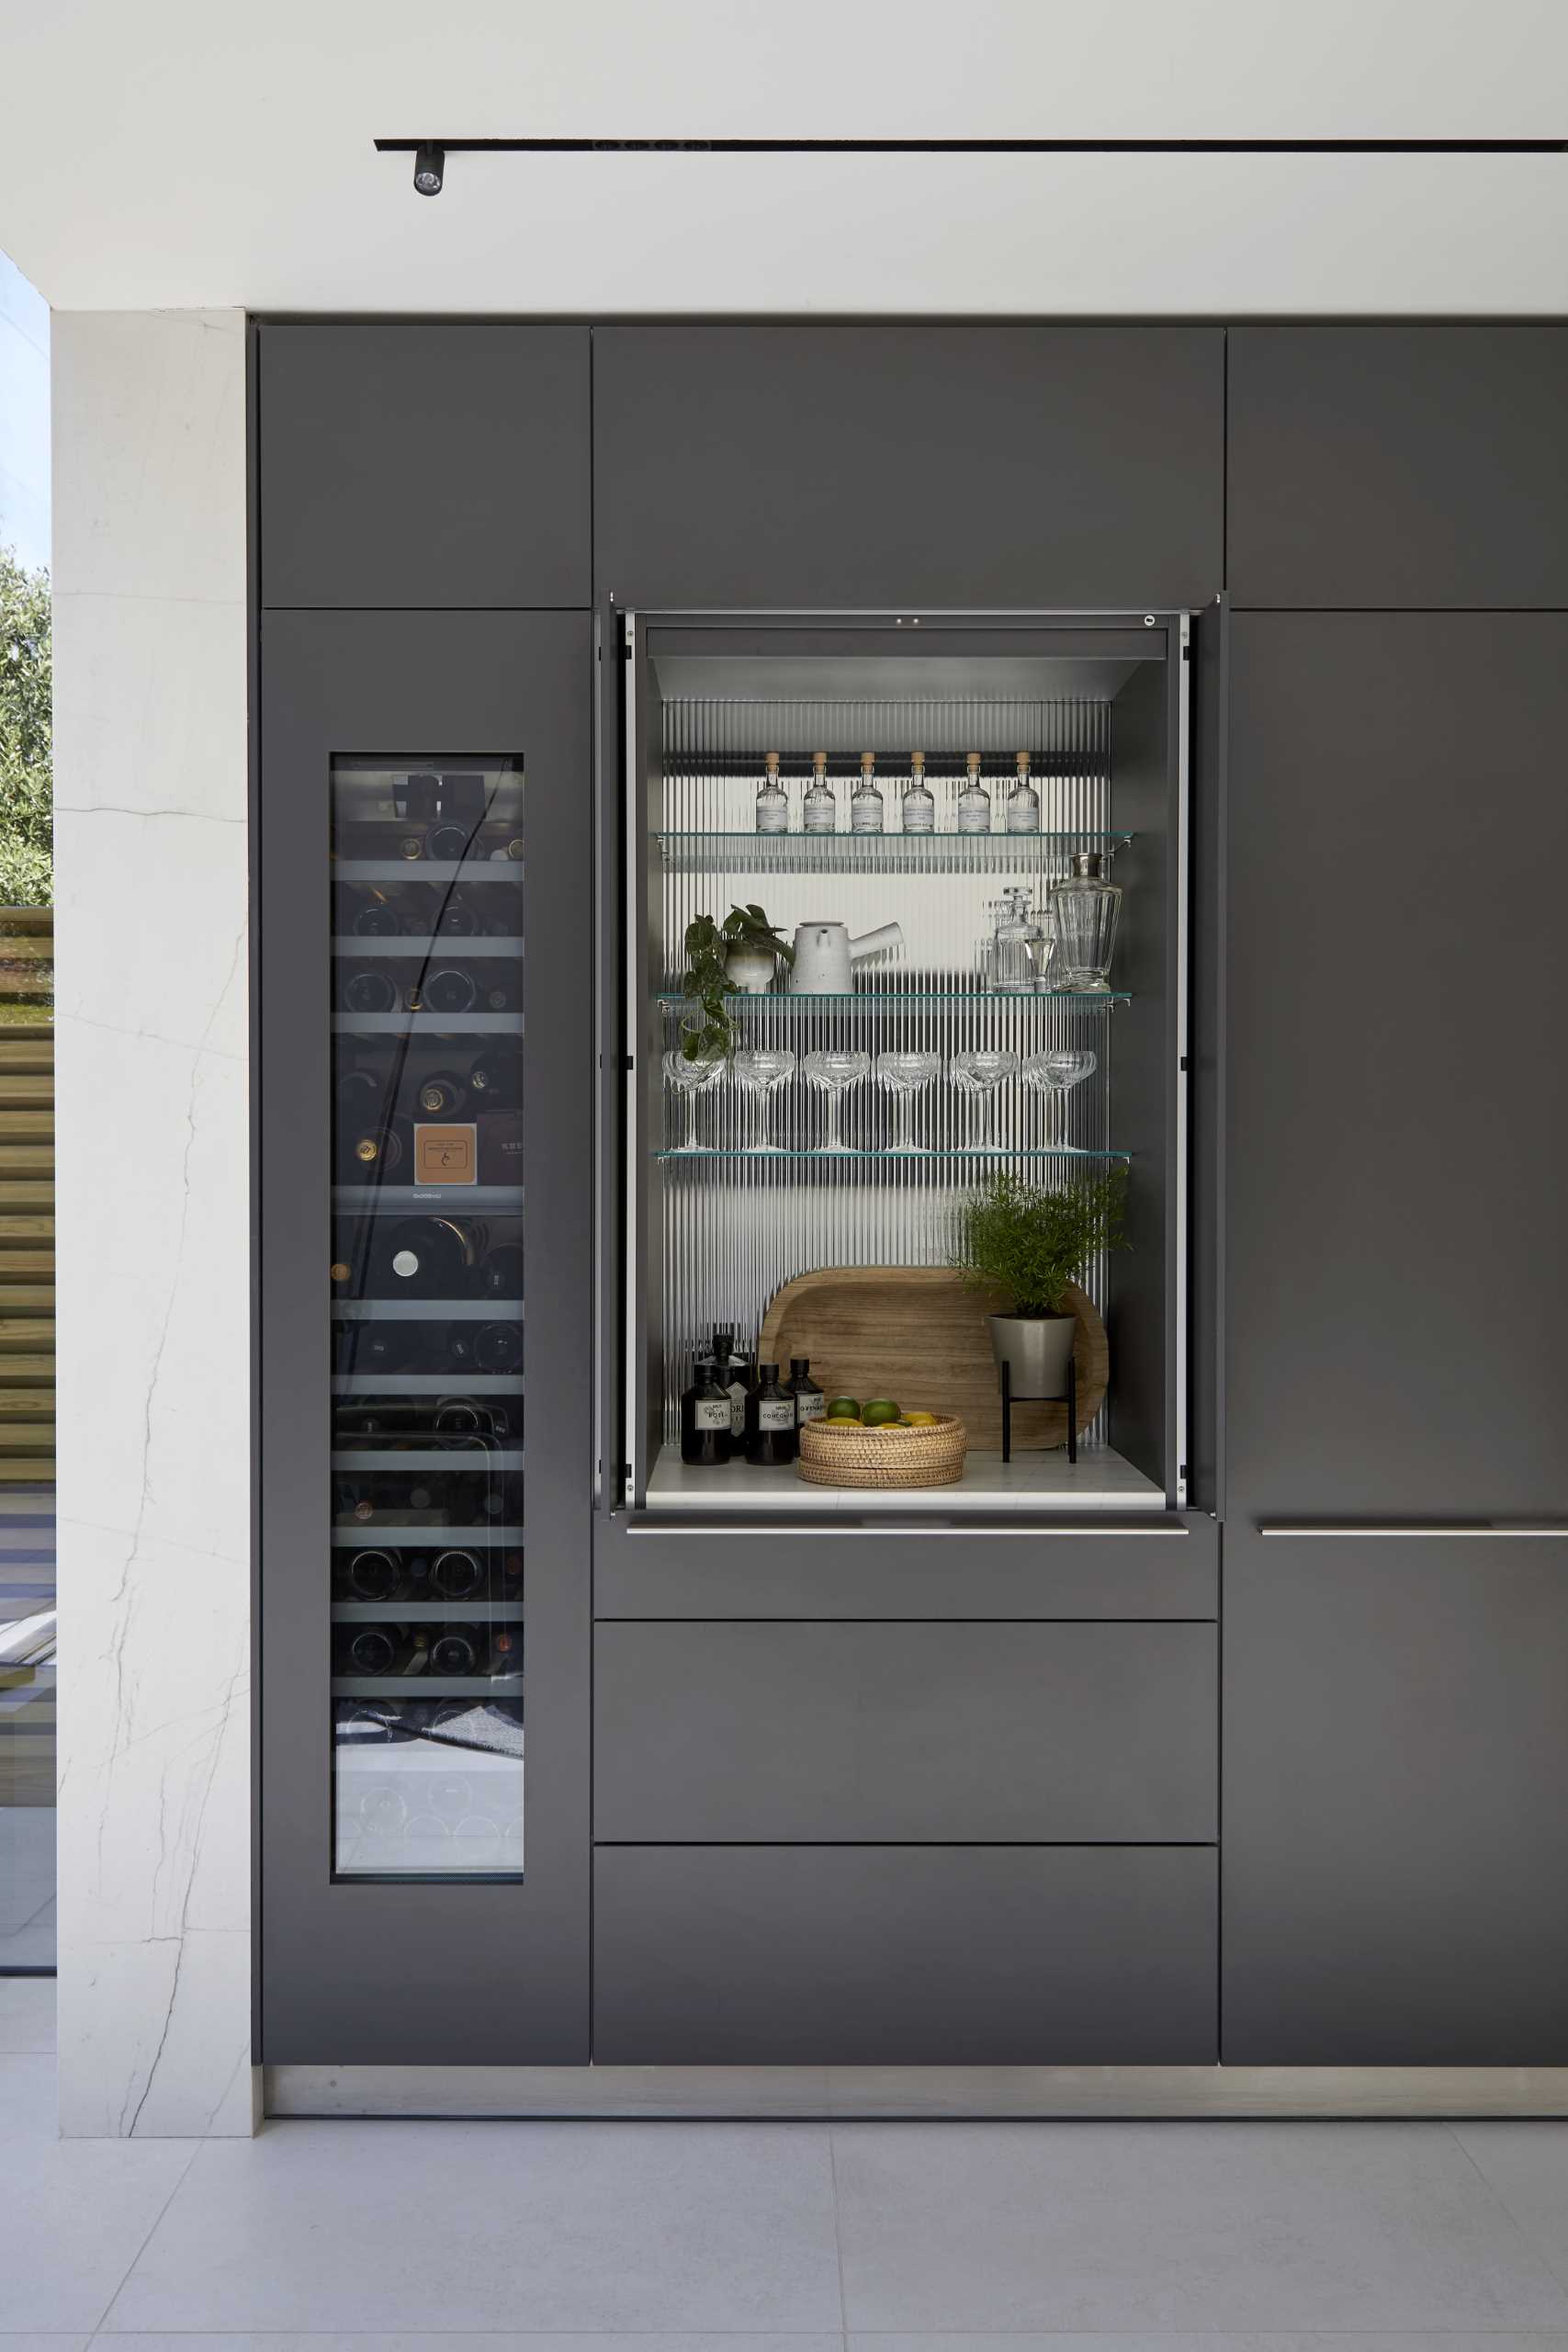 A modern kitchen cabinet hides a bar with glass shelves.